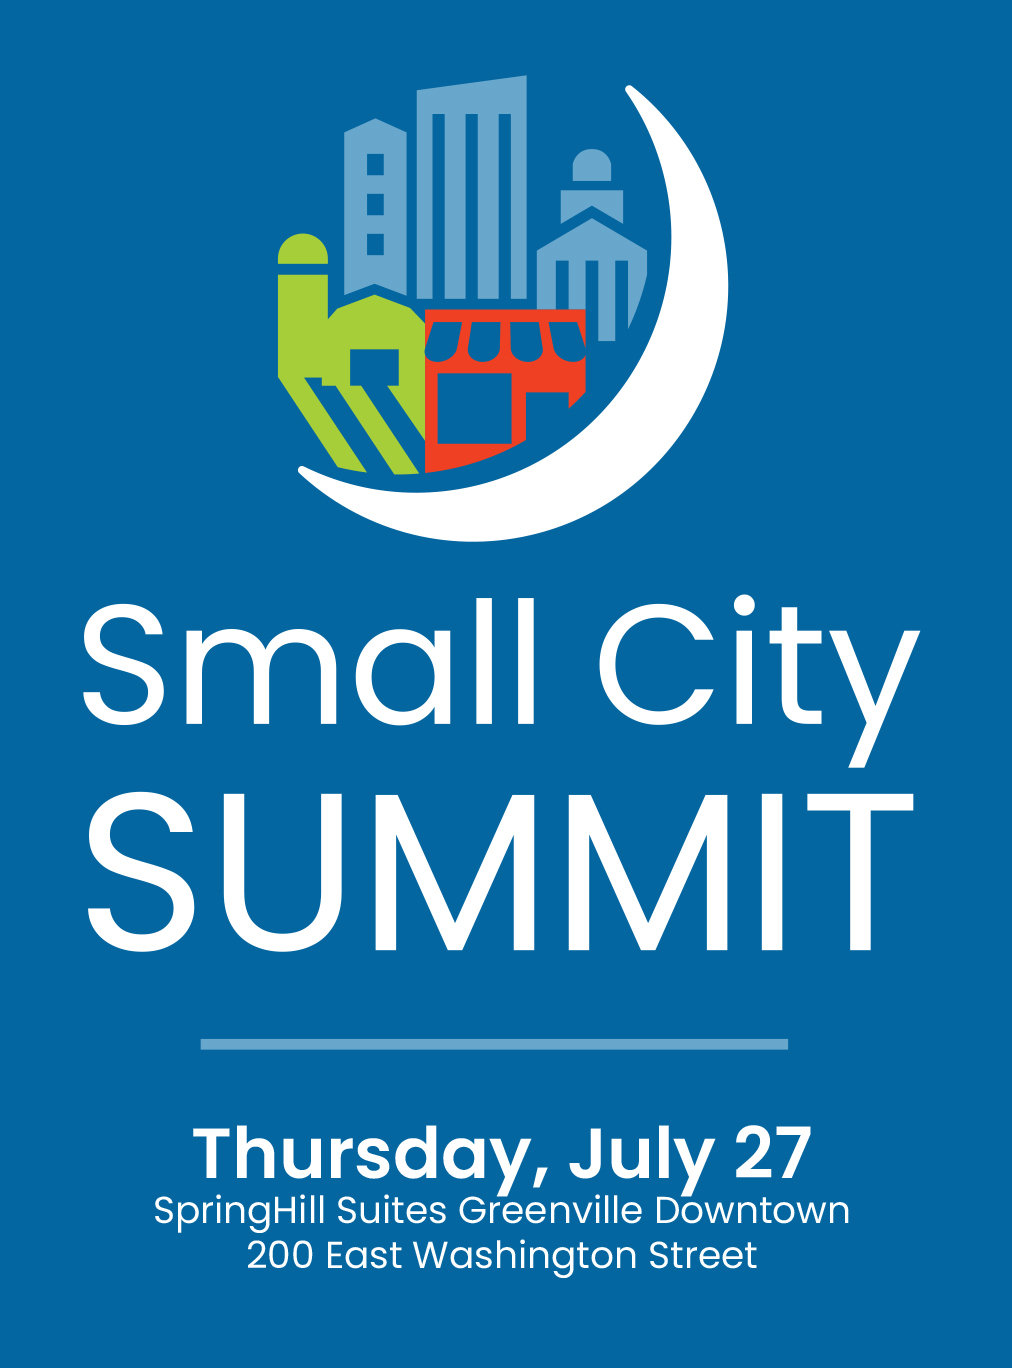 Small City Summit logo